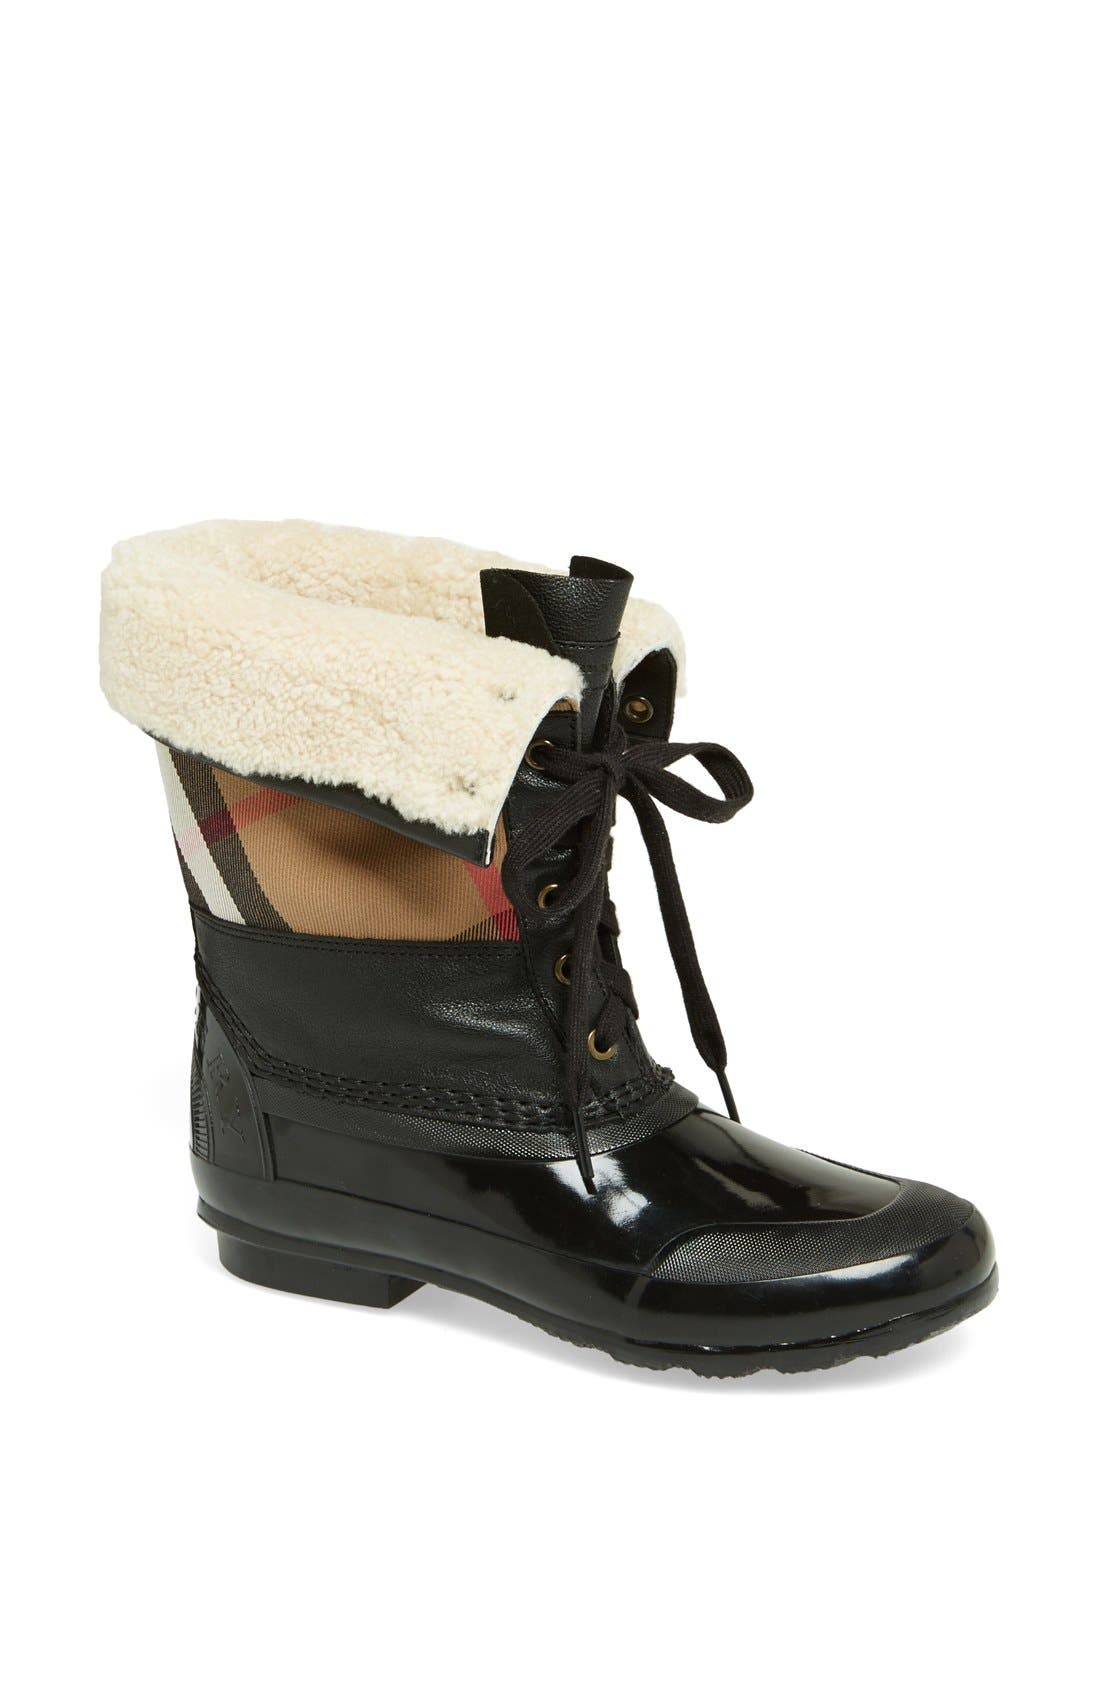 burberry snow boots women